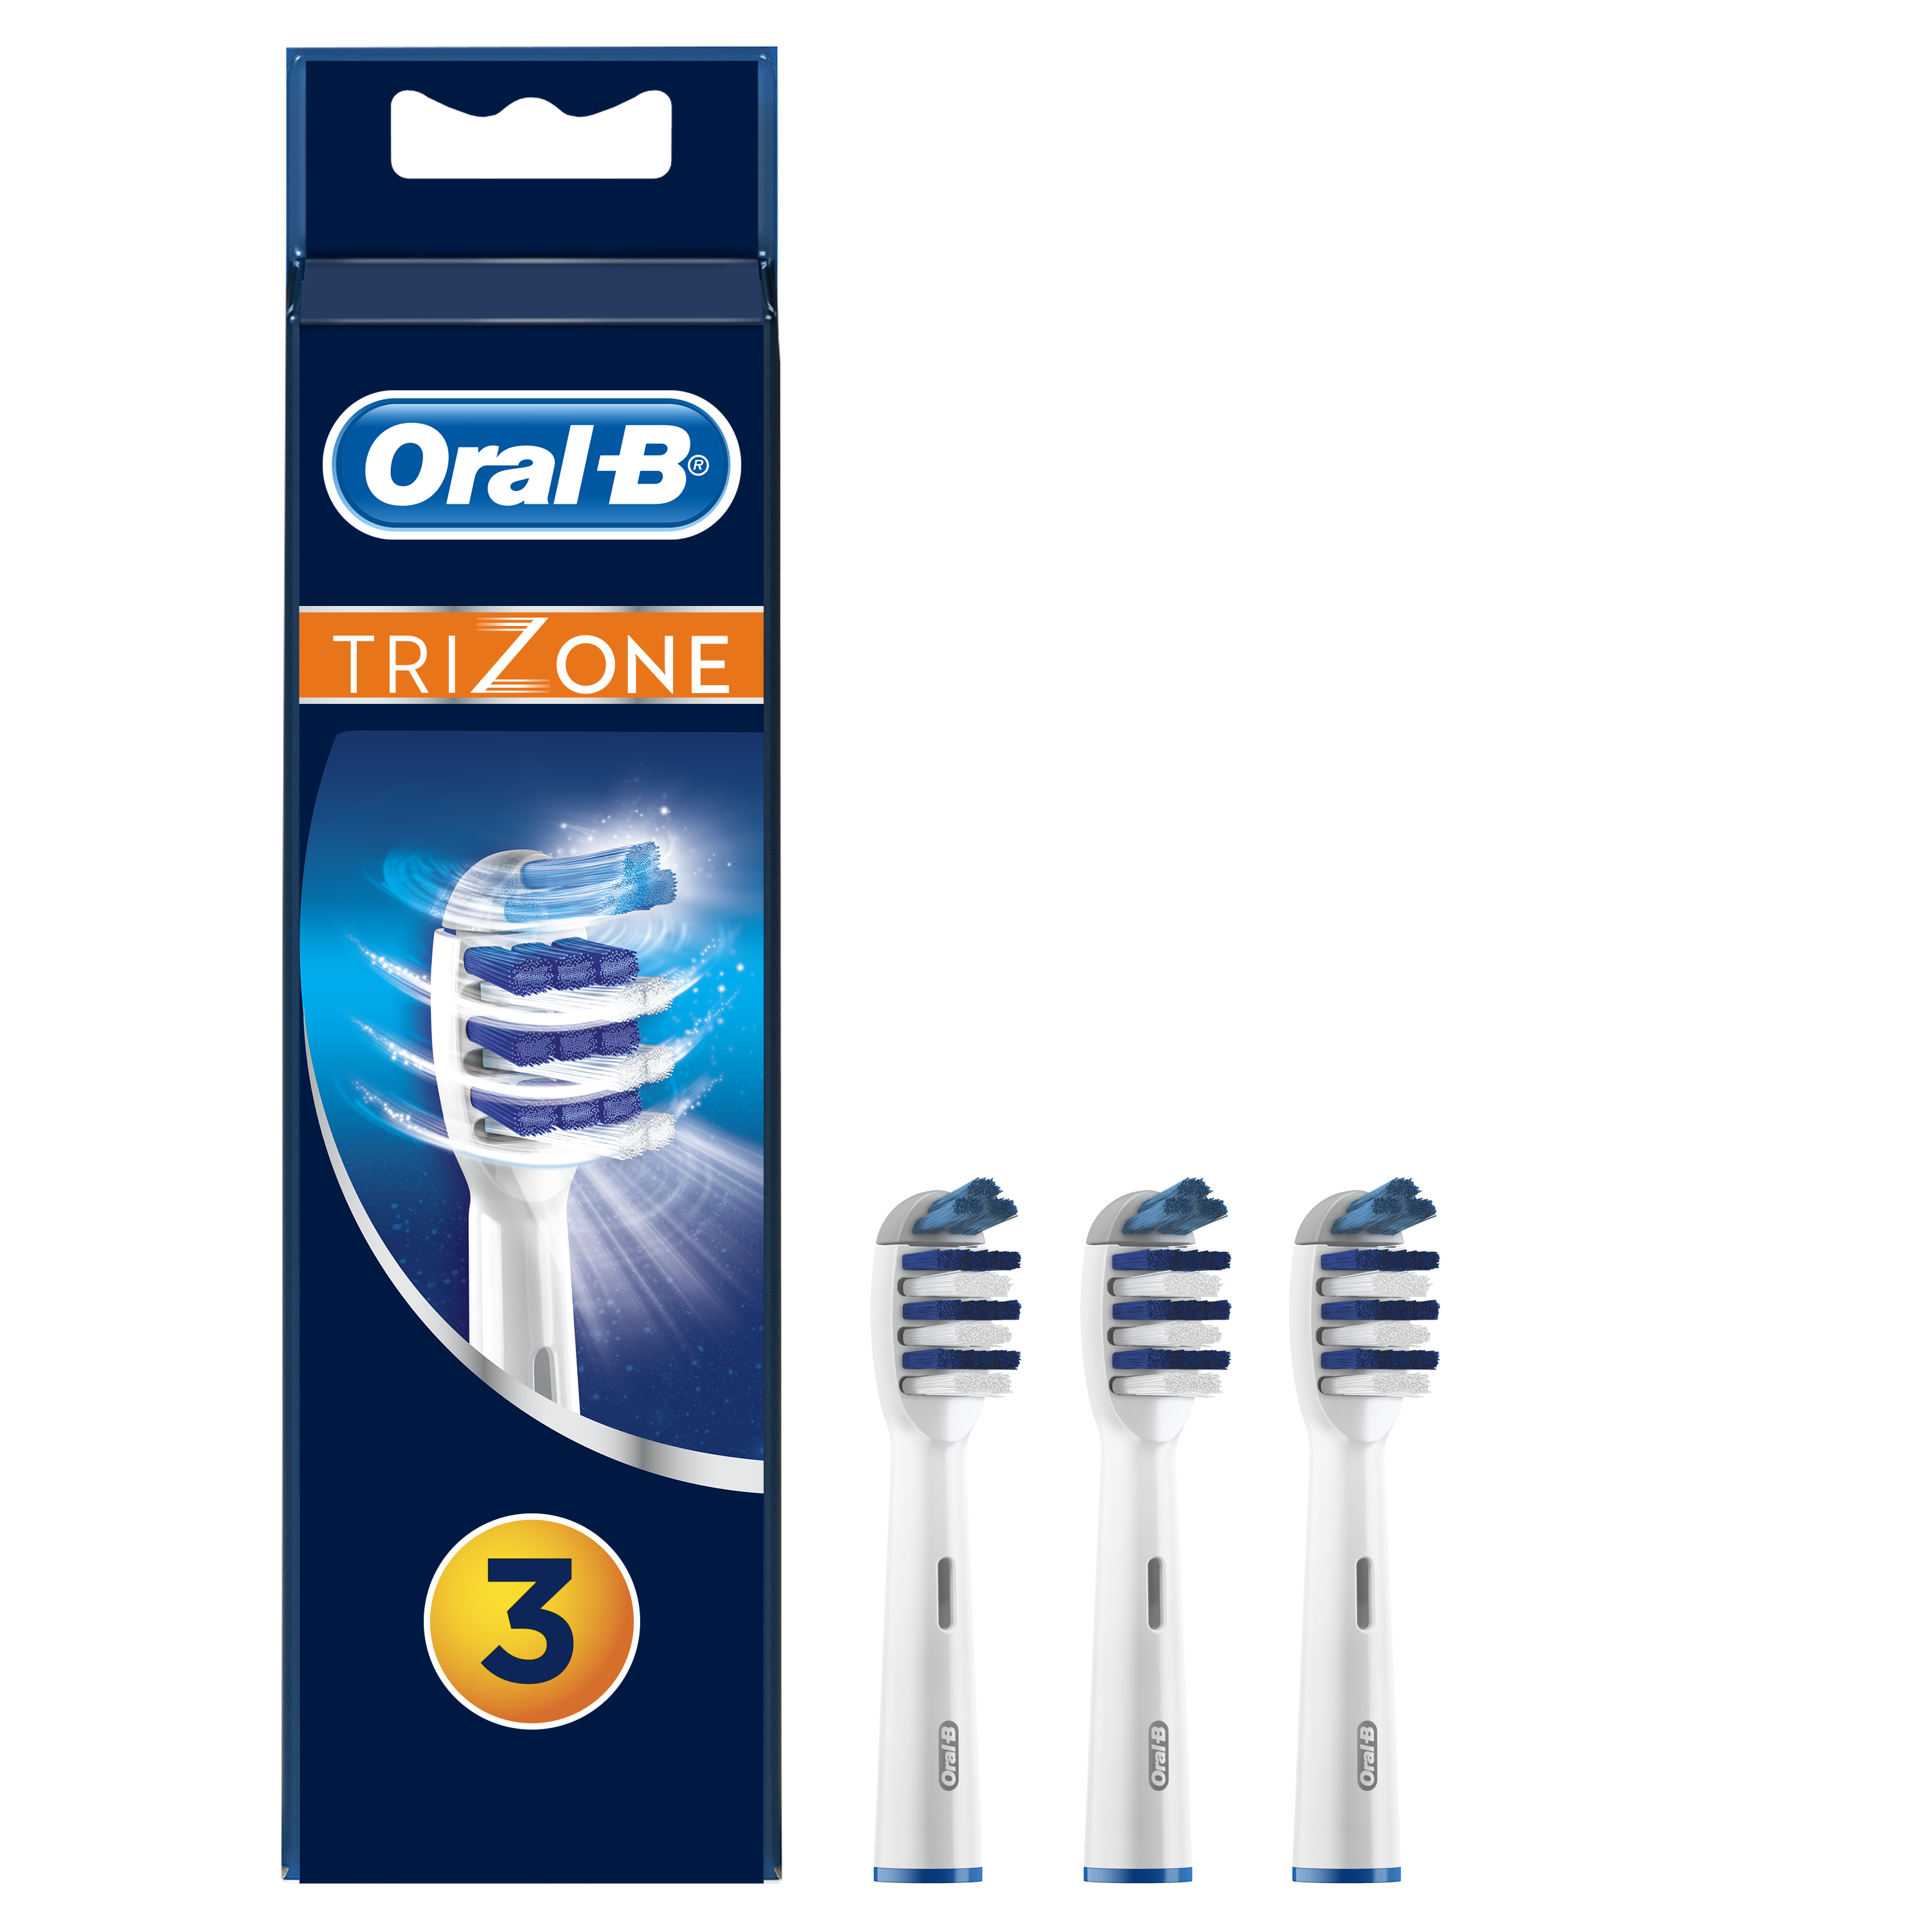 Brossettes trizone Oral-B - boîte de 3 brossettes